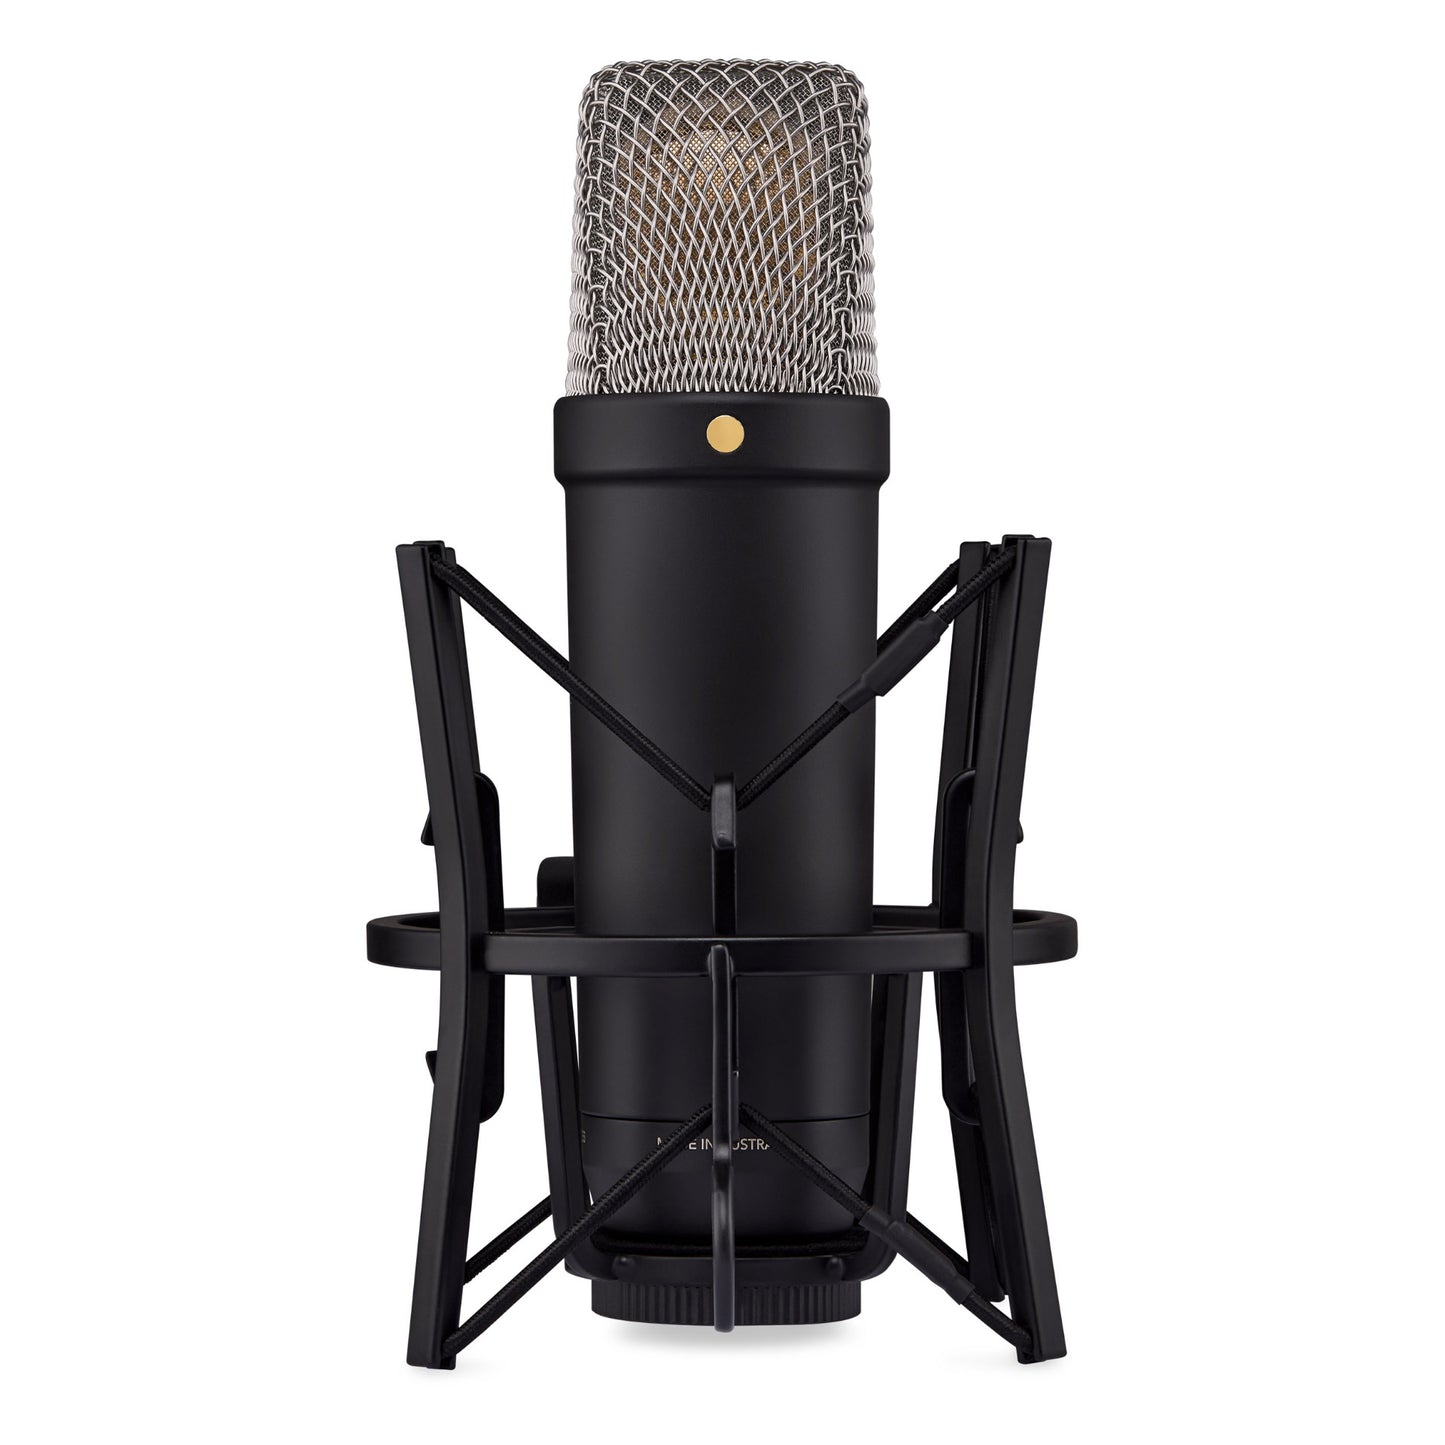 Rode NT1 Generation 5 Hybrid Studio Condenser Microphone - Black